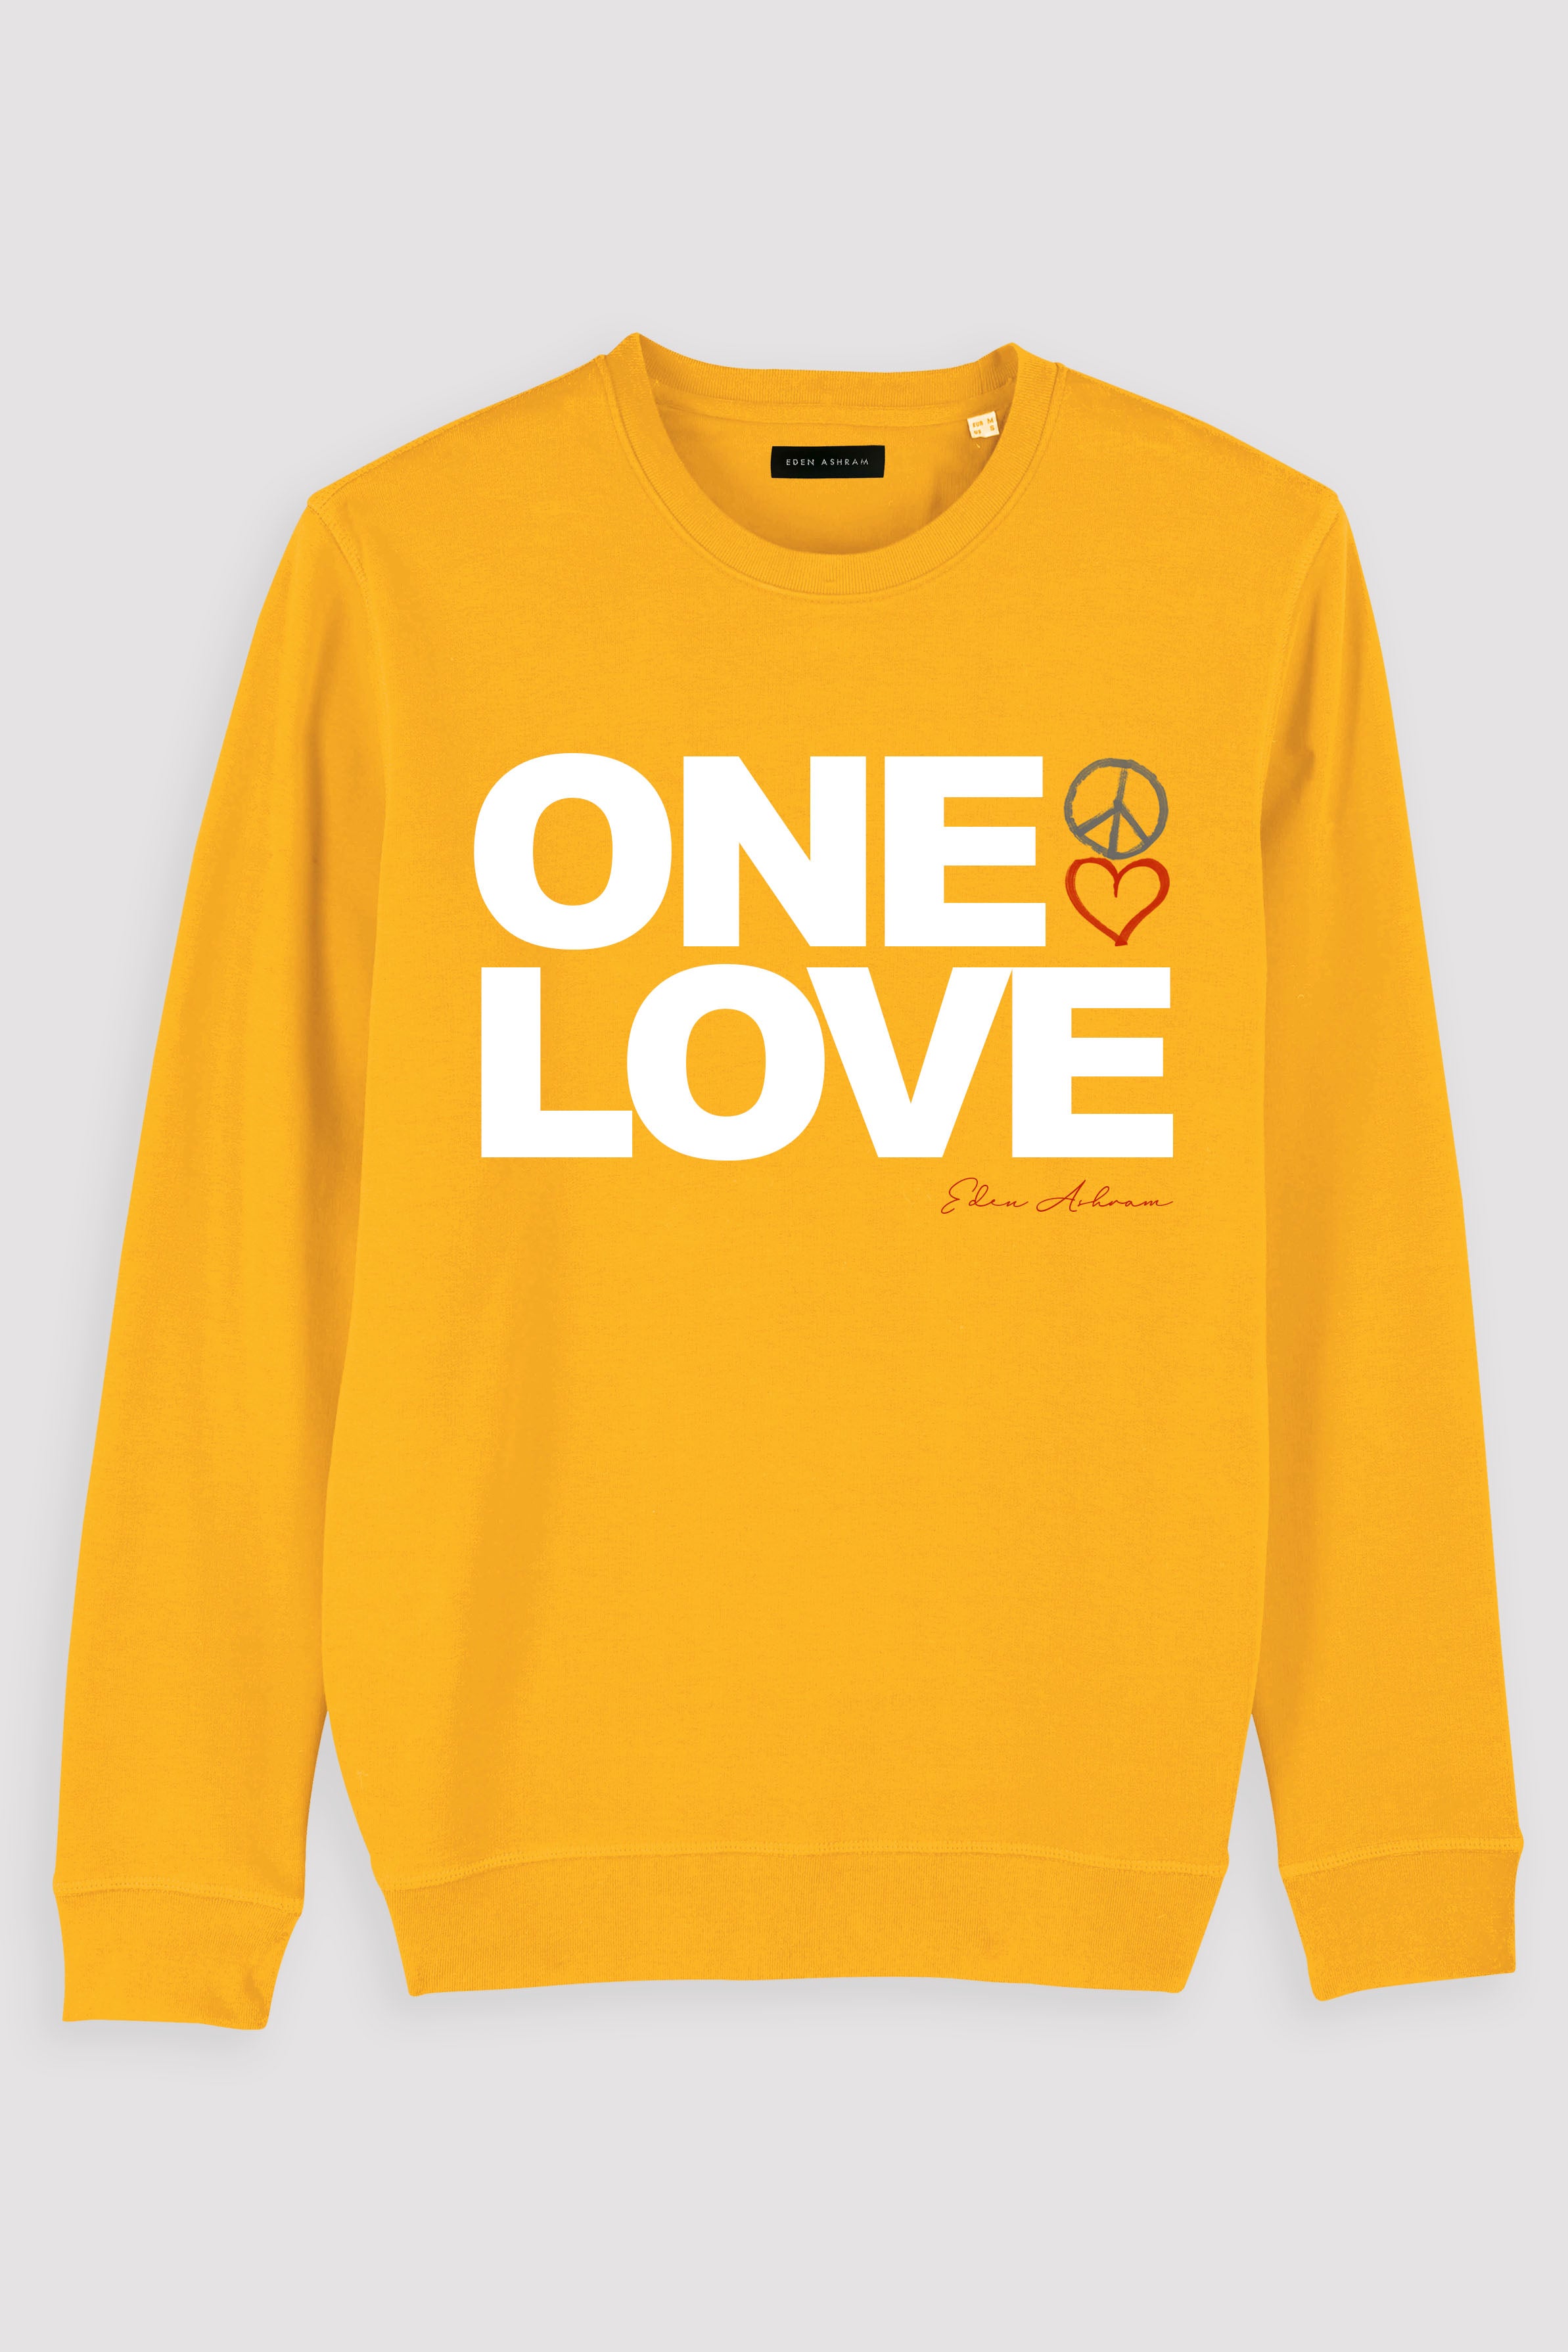 Eden Ashram One Love Premium Crew Neck Sweatshirt Spectra Yellow